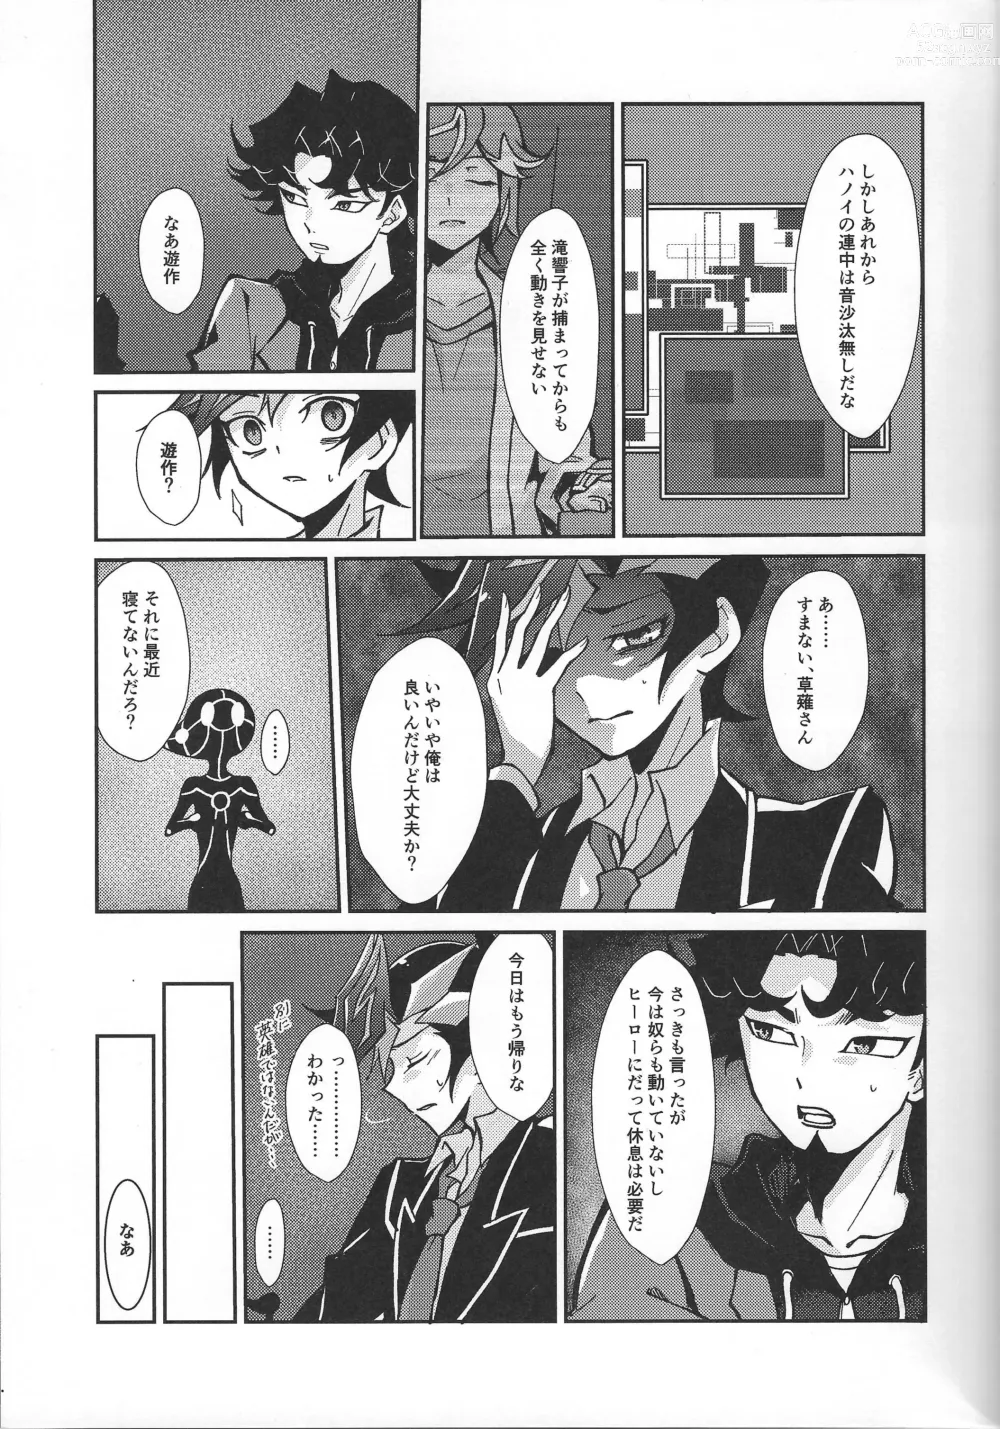 Page 6 of doujinshi Fukushu-sha ni juko o